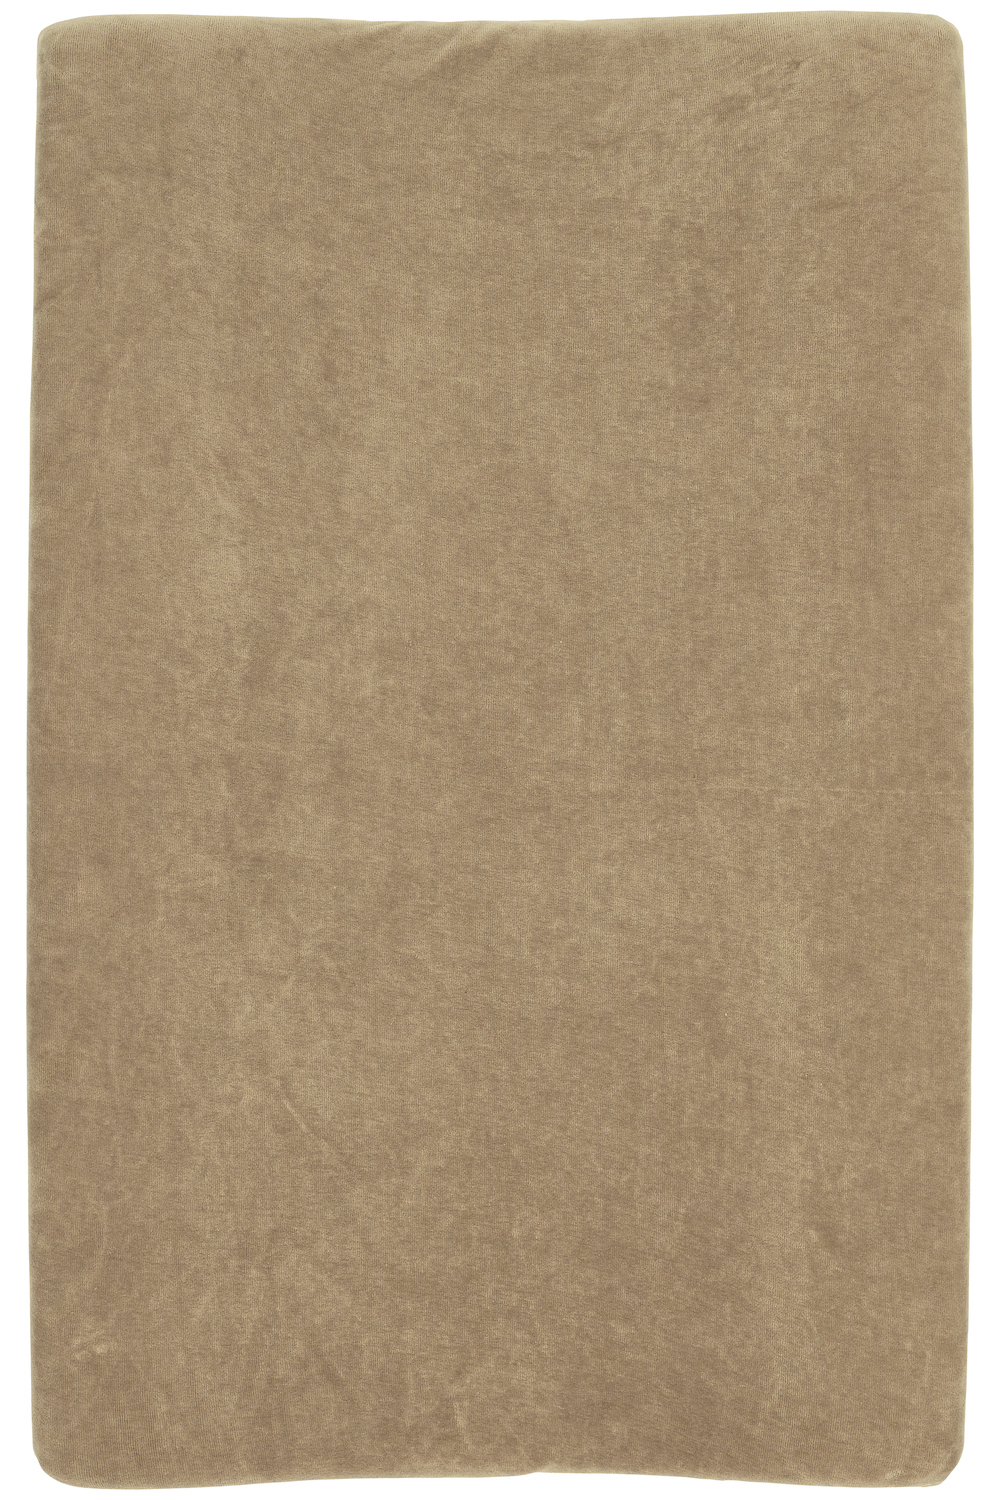 Aankleedkussenhoes Velvet - Taupe - 50x70cm